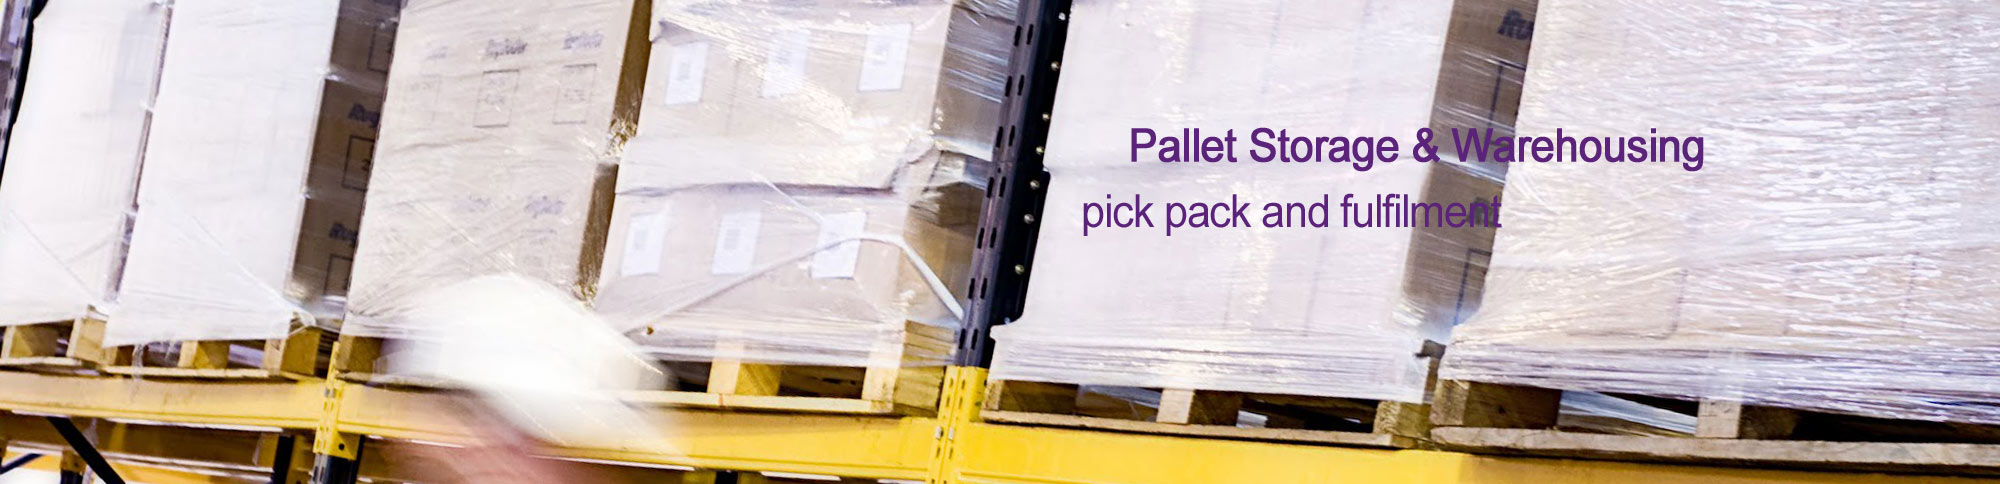 Pallet Storage & Warehousing - Pick Pack & Fulfilment